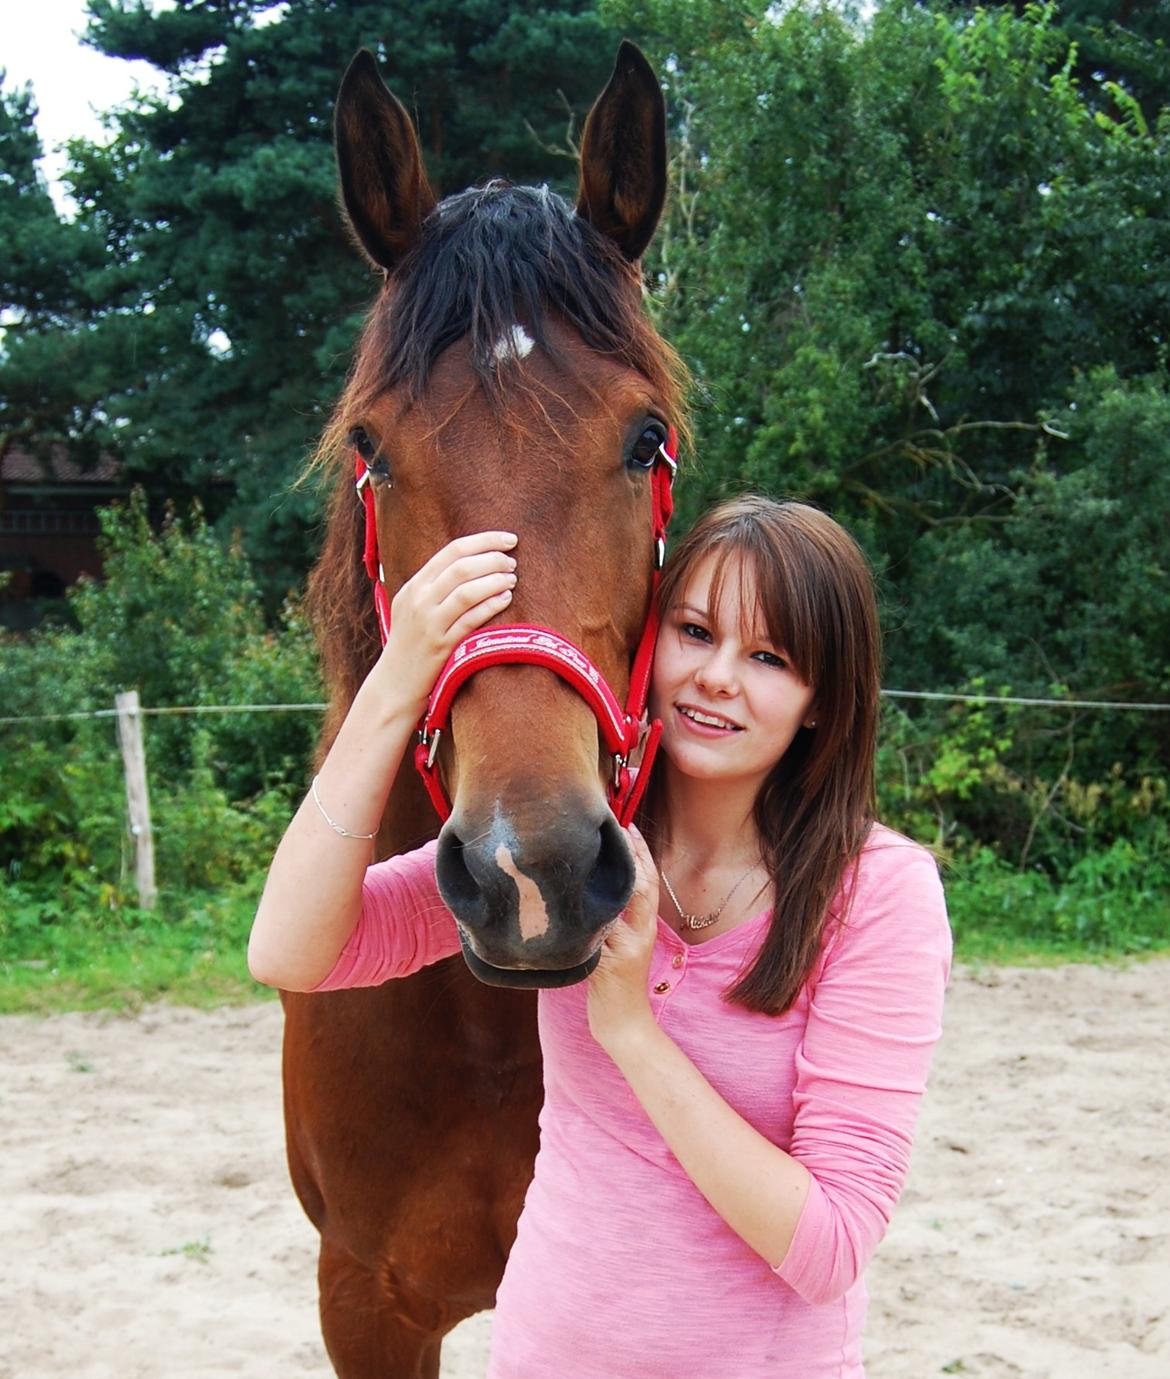 Anden særlig race Louzarina<3 (Baby-hesten) - Velkommen til Baby-hesten's profil!:D <3

10-8-2012 billede 1